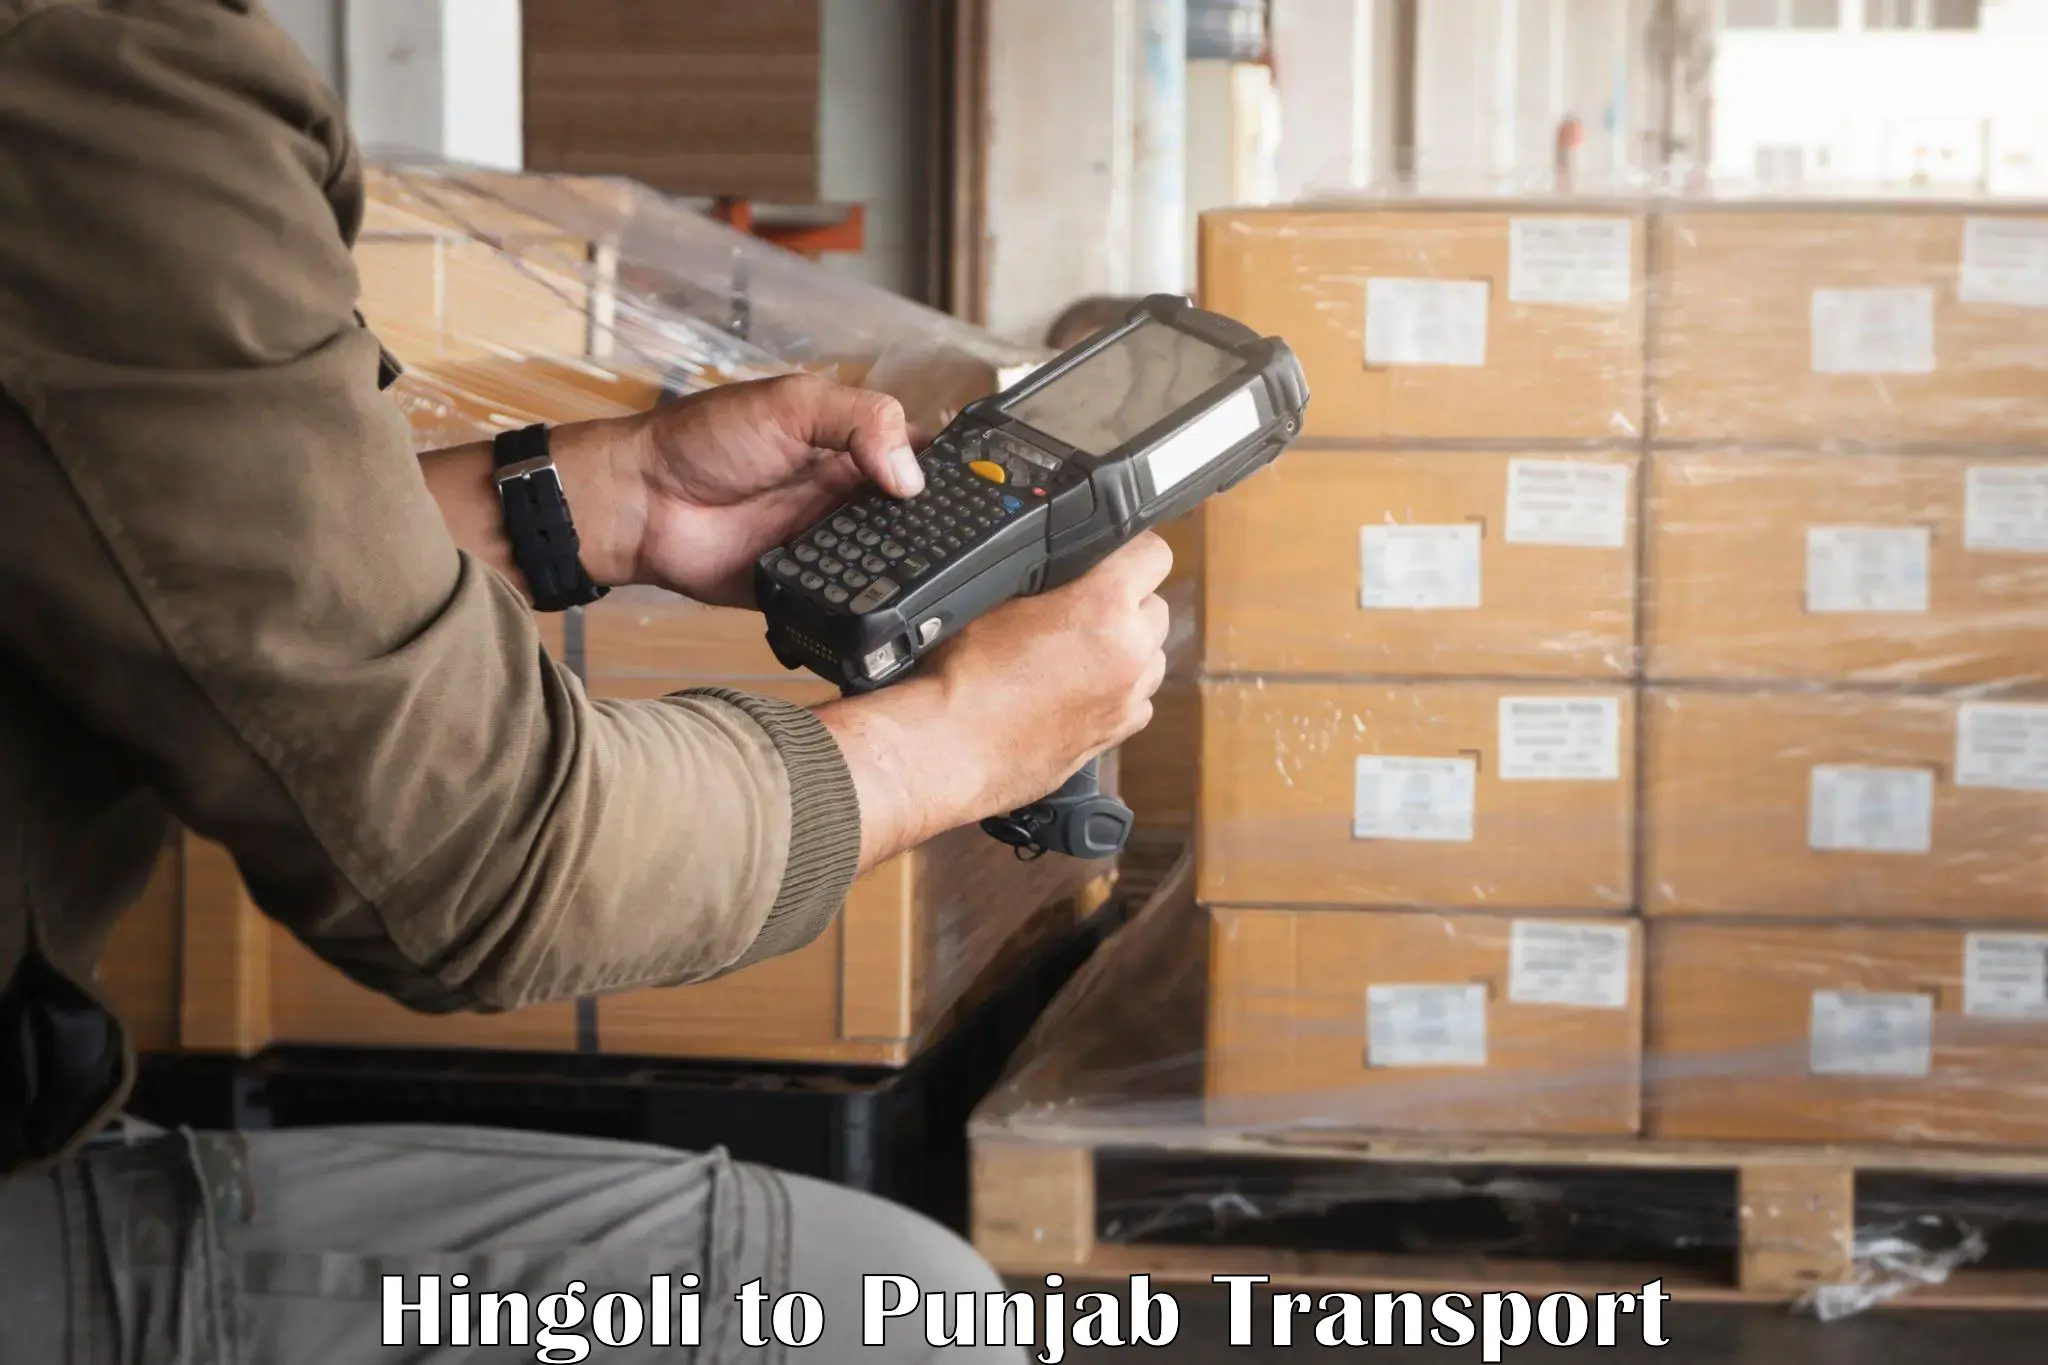 Bike transport service Hingoli to Amritsar